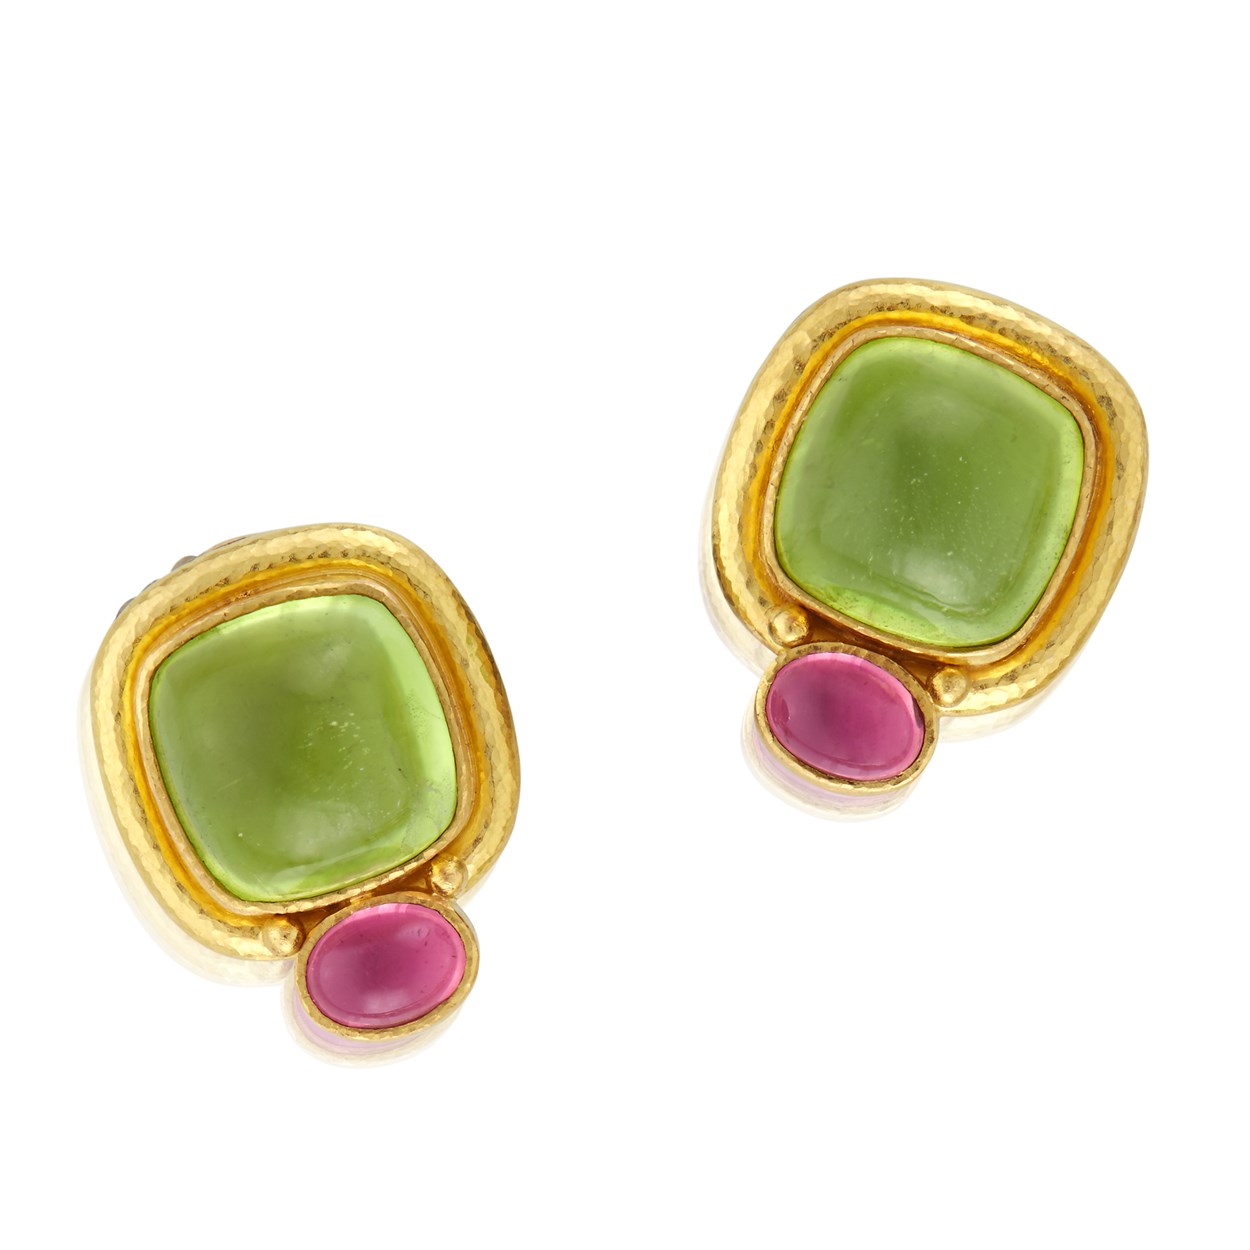 Lot 24 - A pair of eighteen karat gold, peridot, and pink tourmaline earrings, Elizabeth Locke